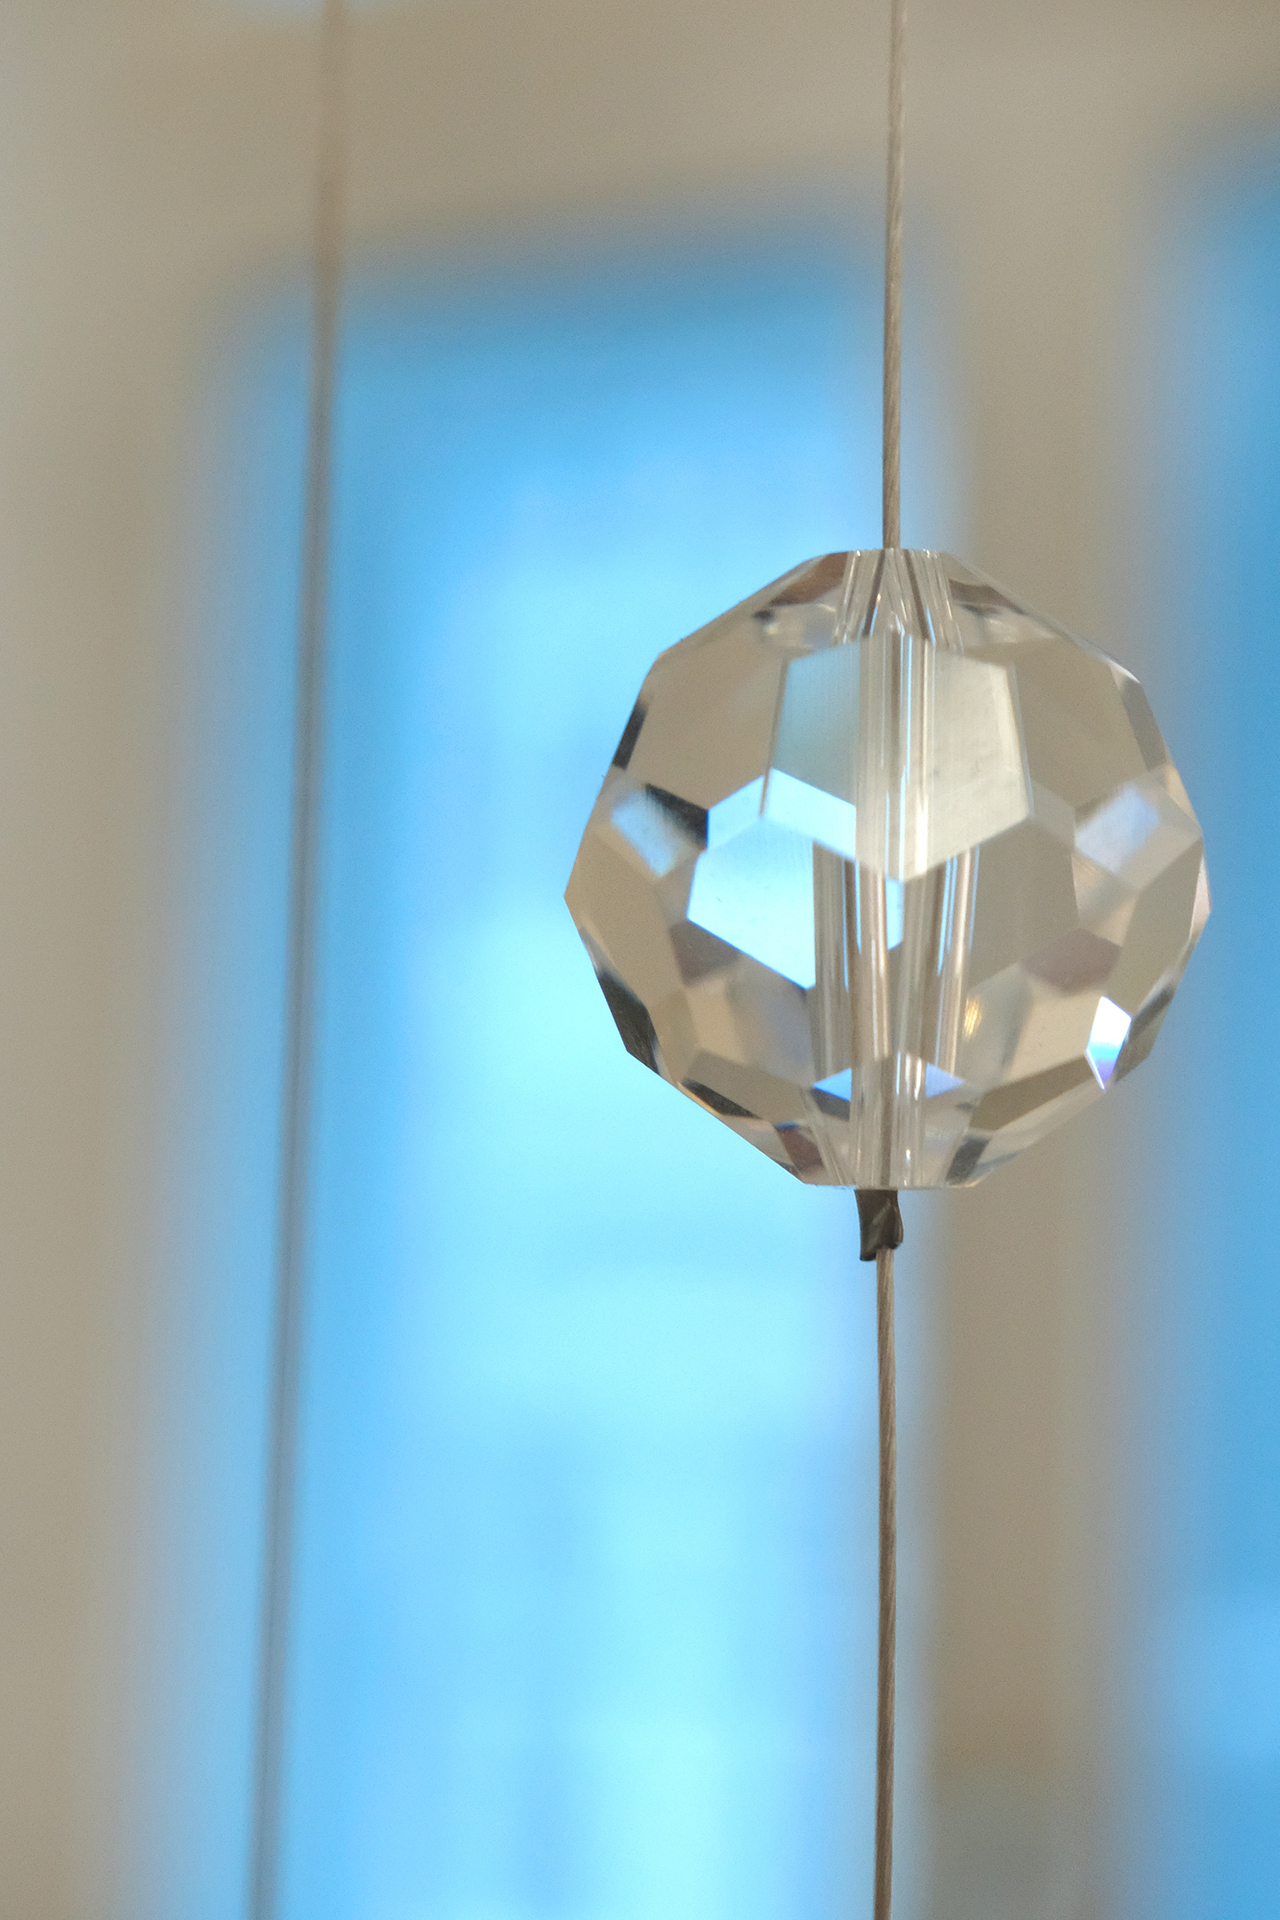 Lena Marie Emrich, "Walk through Series" (detail), 2020, Polished glass pearls, plexiglass, aluminium, 240 x 130 cm x 12 cm and 200 x 100 cm x 12 cm